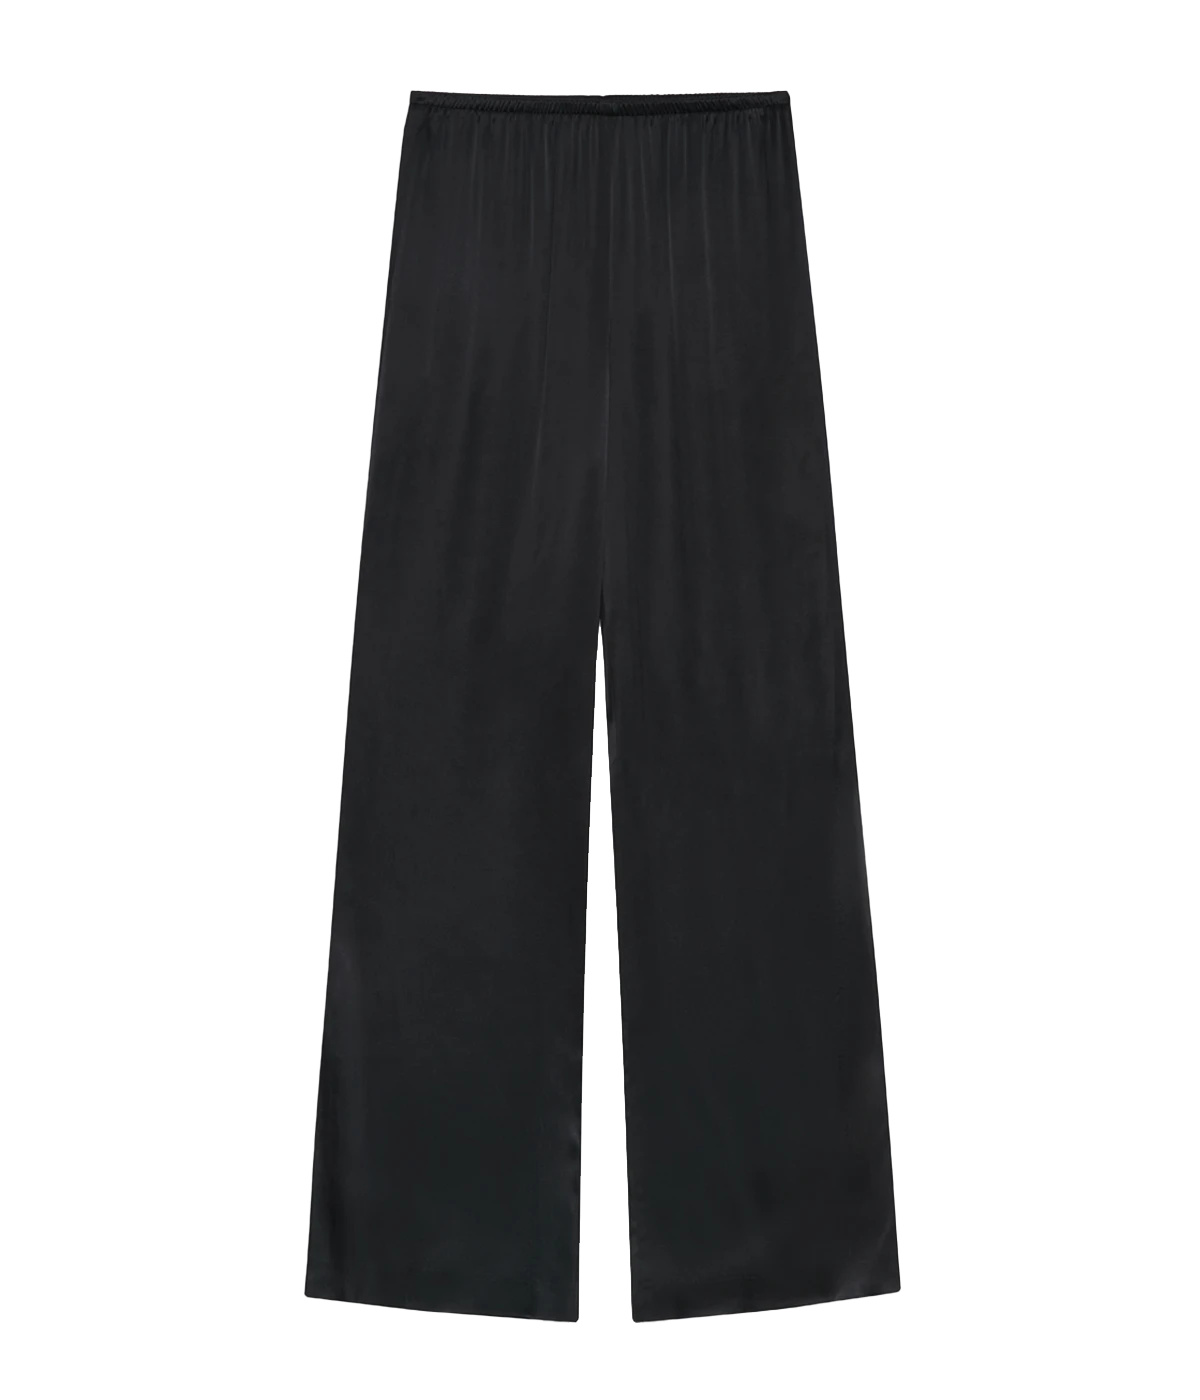 Black wide leg silk pants by designer Anine Bing,